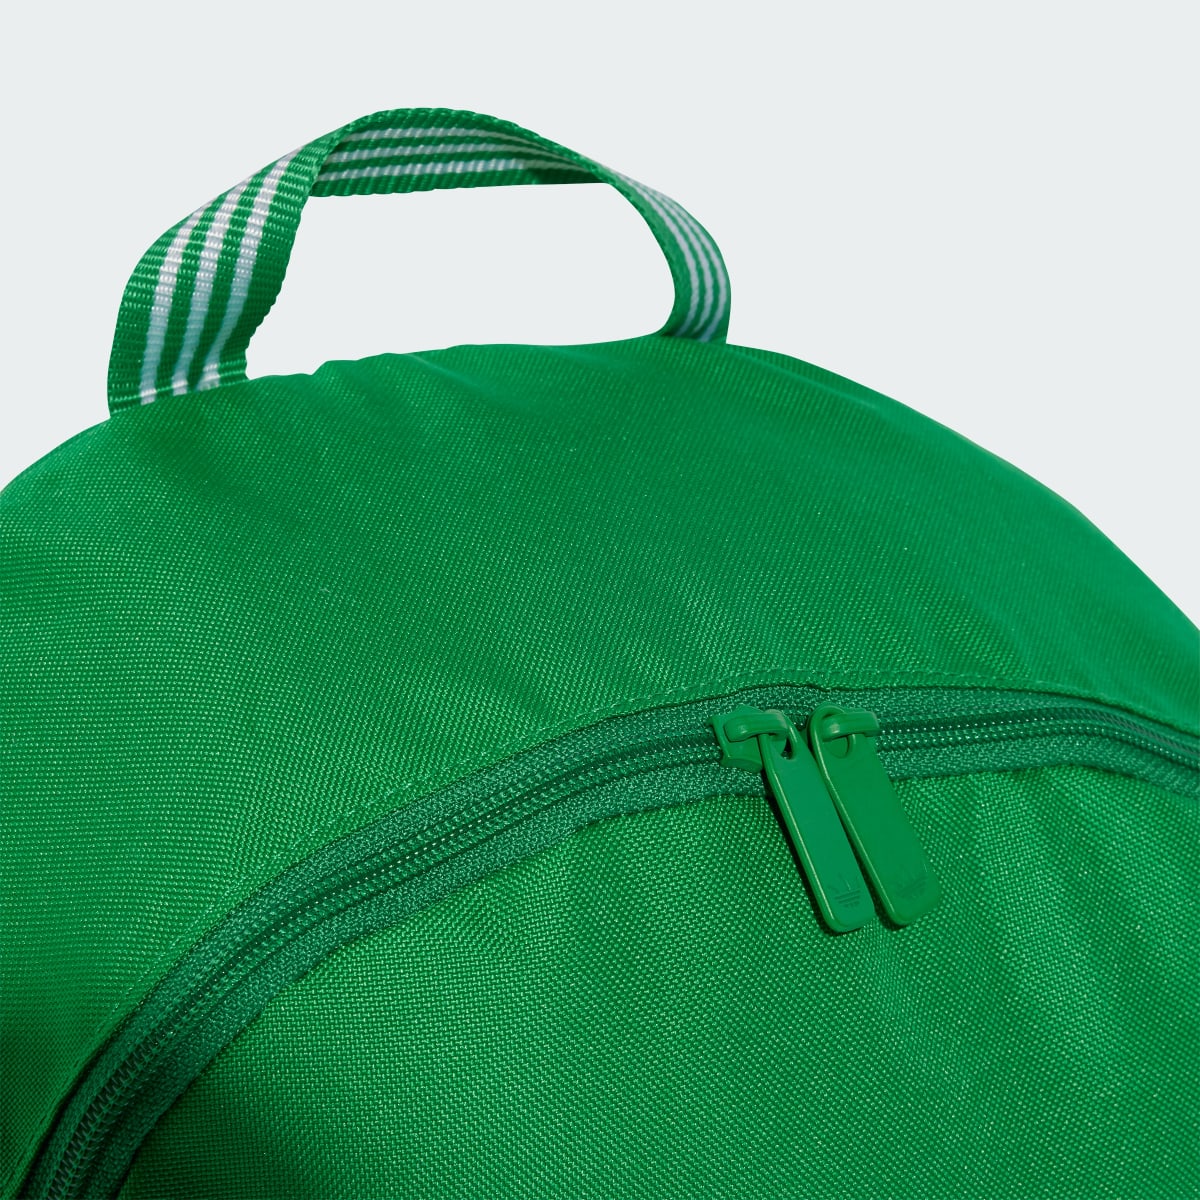 Adidas Adicolor Backpack. 5